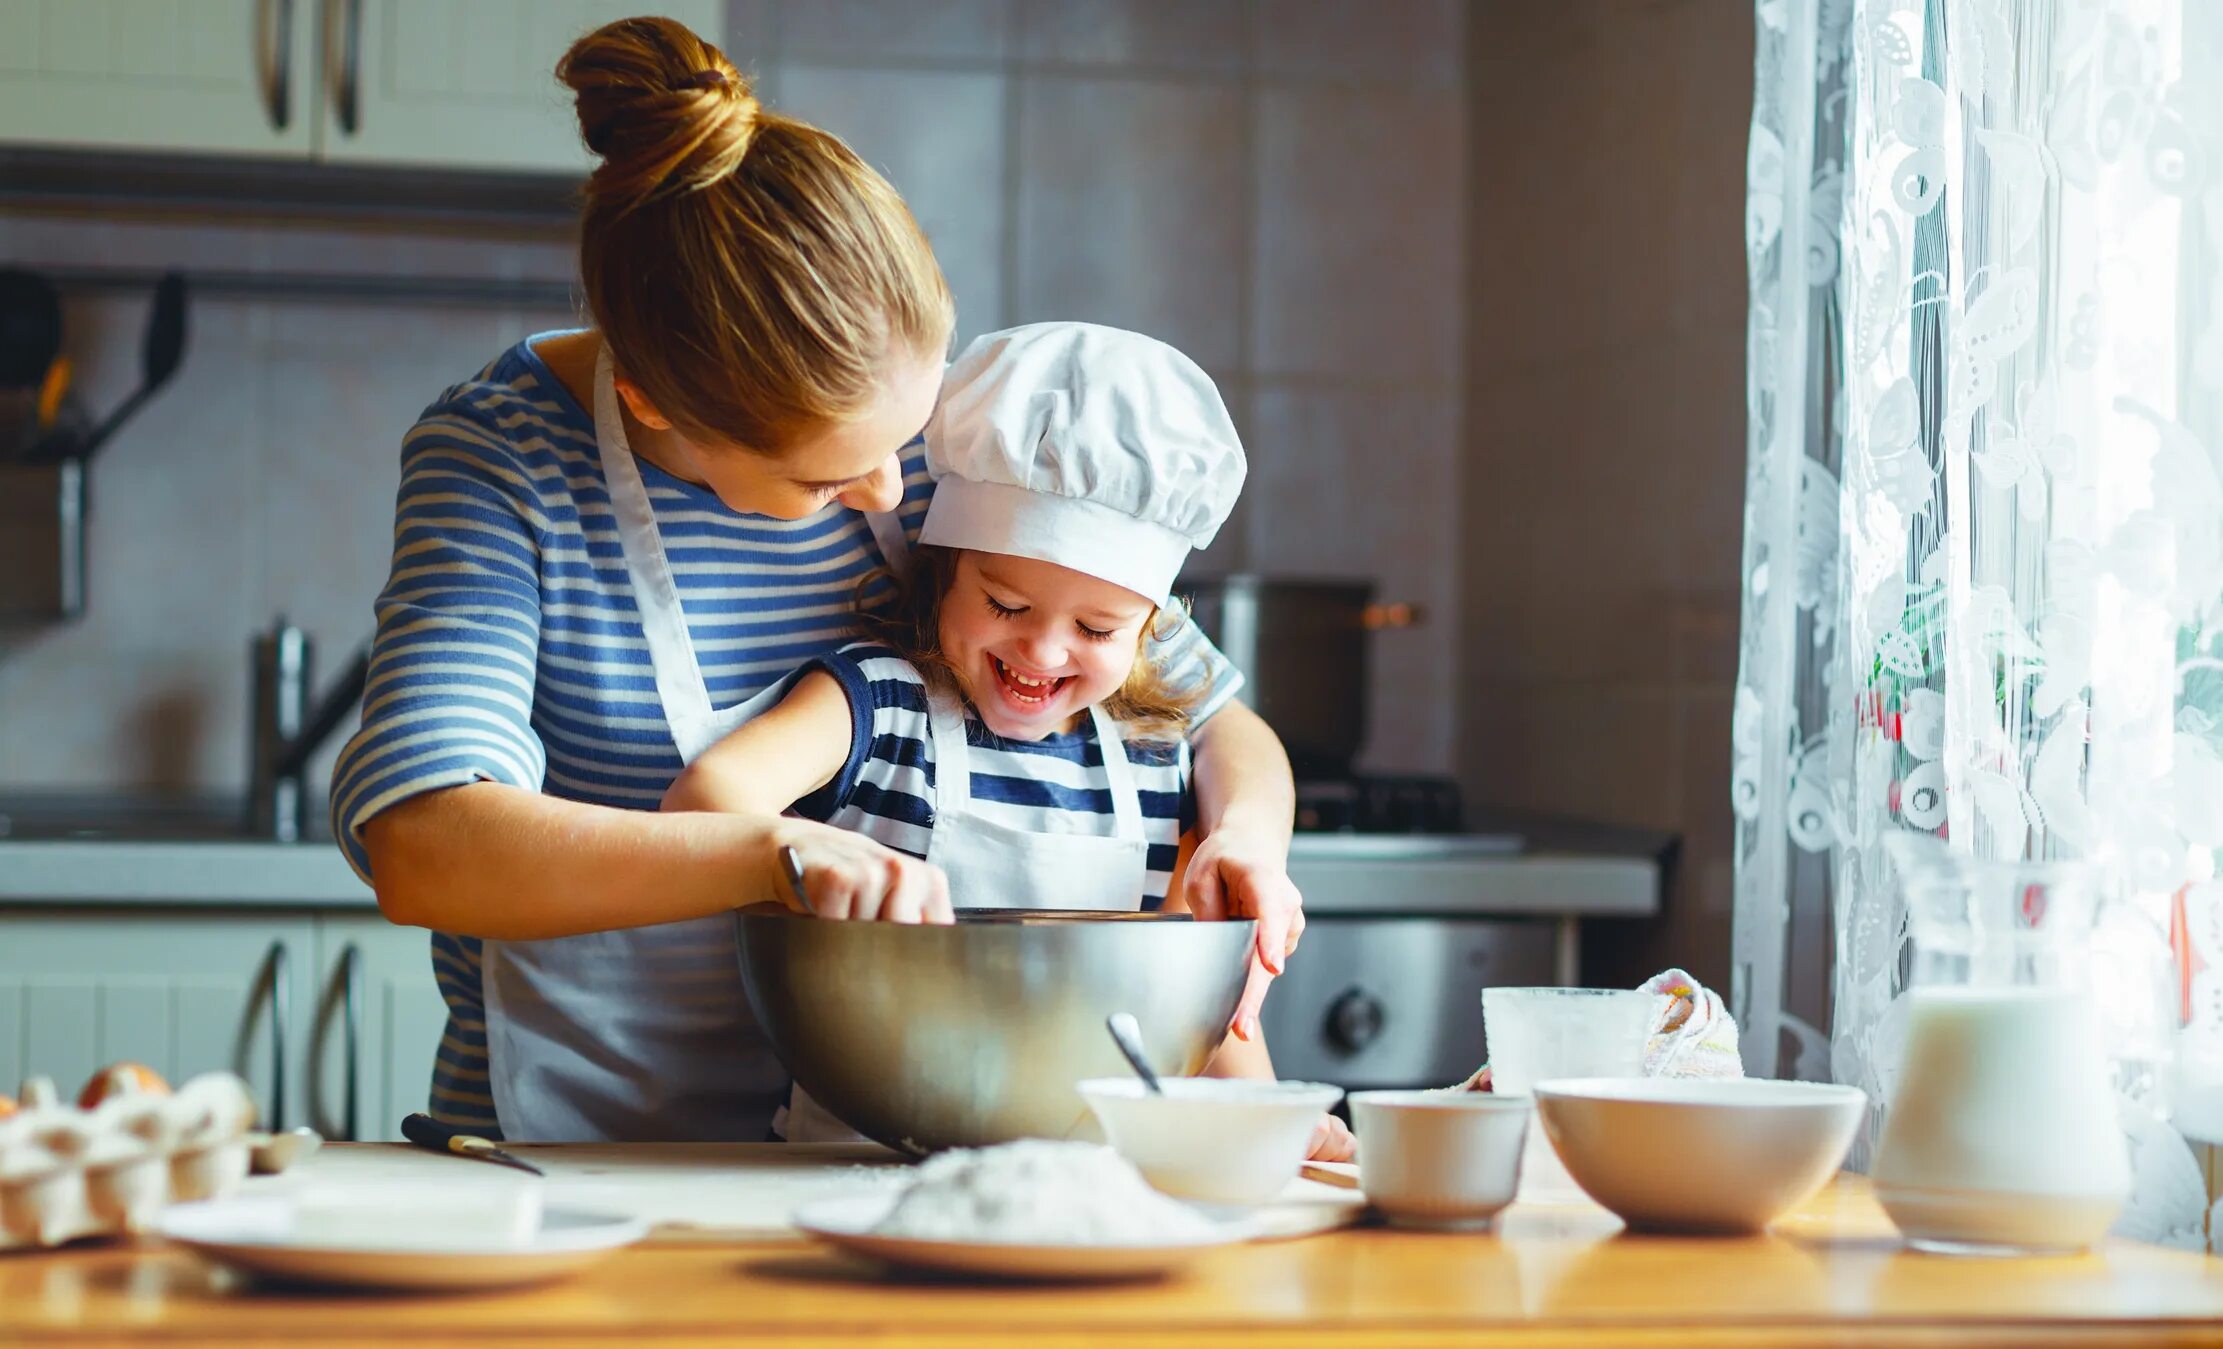 Your mum work. Мама с ребенком на кухне. Кухня для детей. Готовка с детьми на кухне. Фотосессия на кухне.